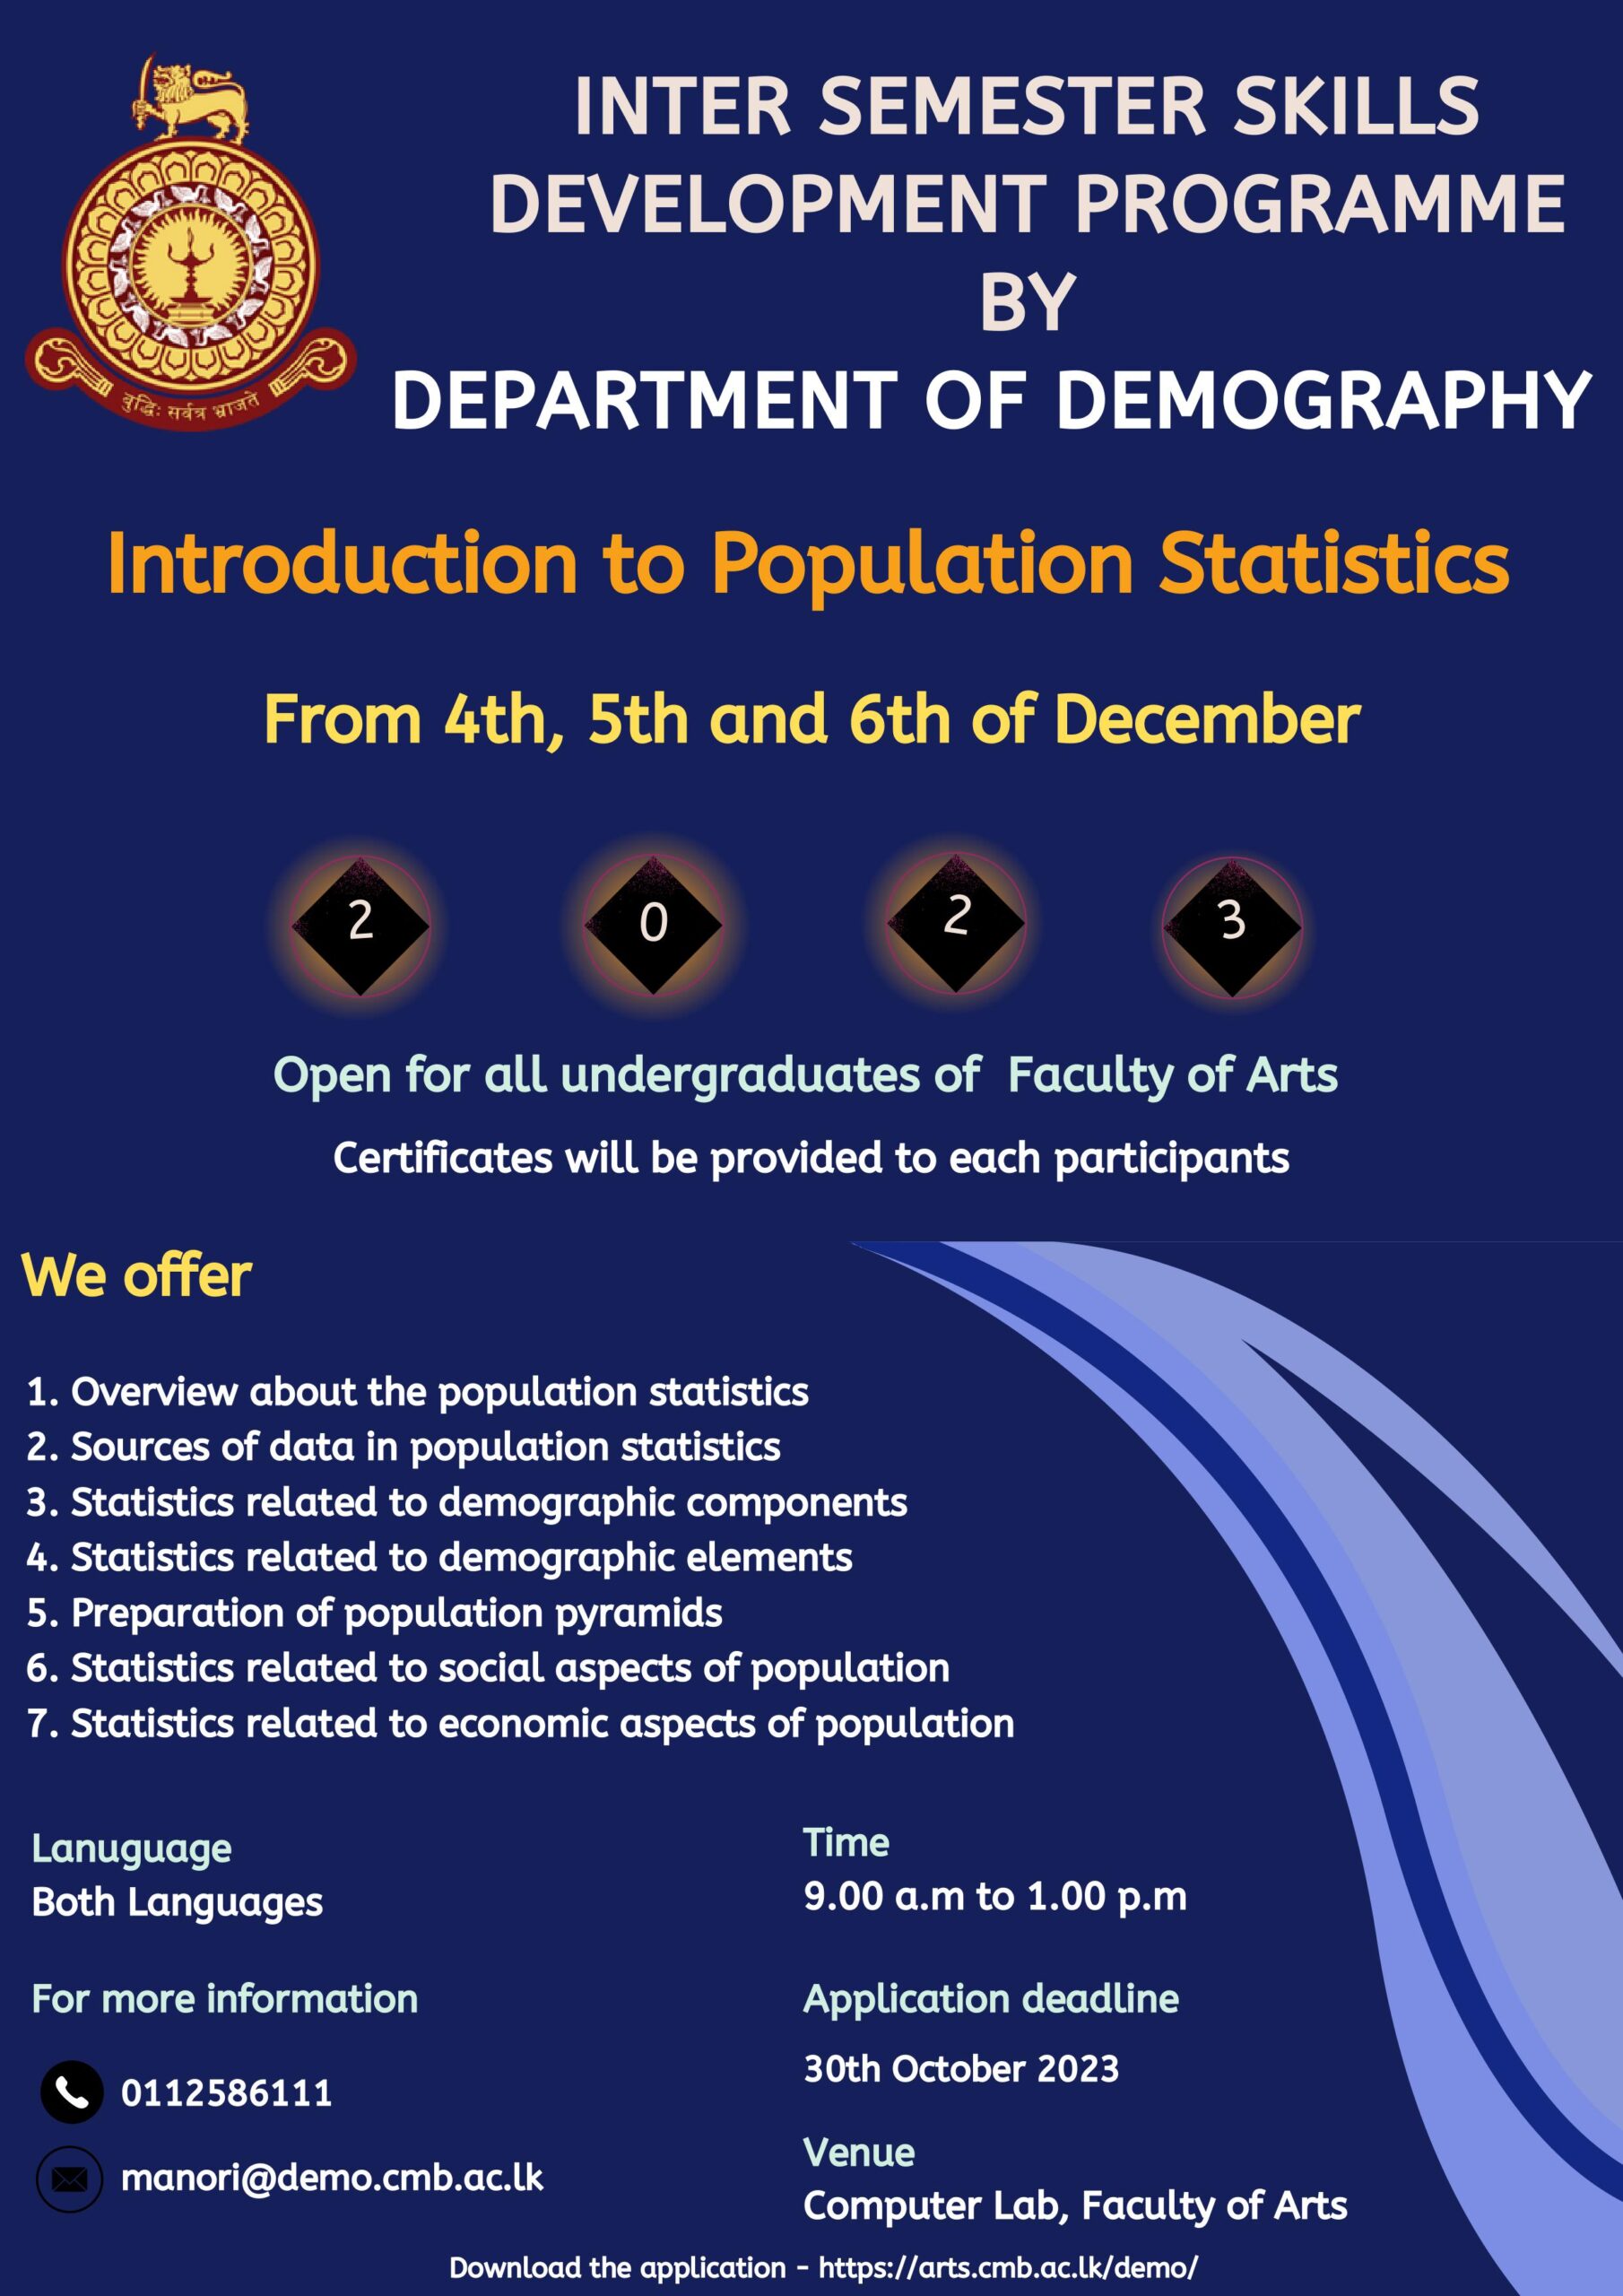 Inter Semester Skills Development Programme by Department of Demography